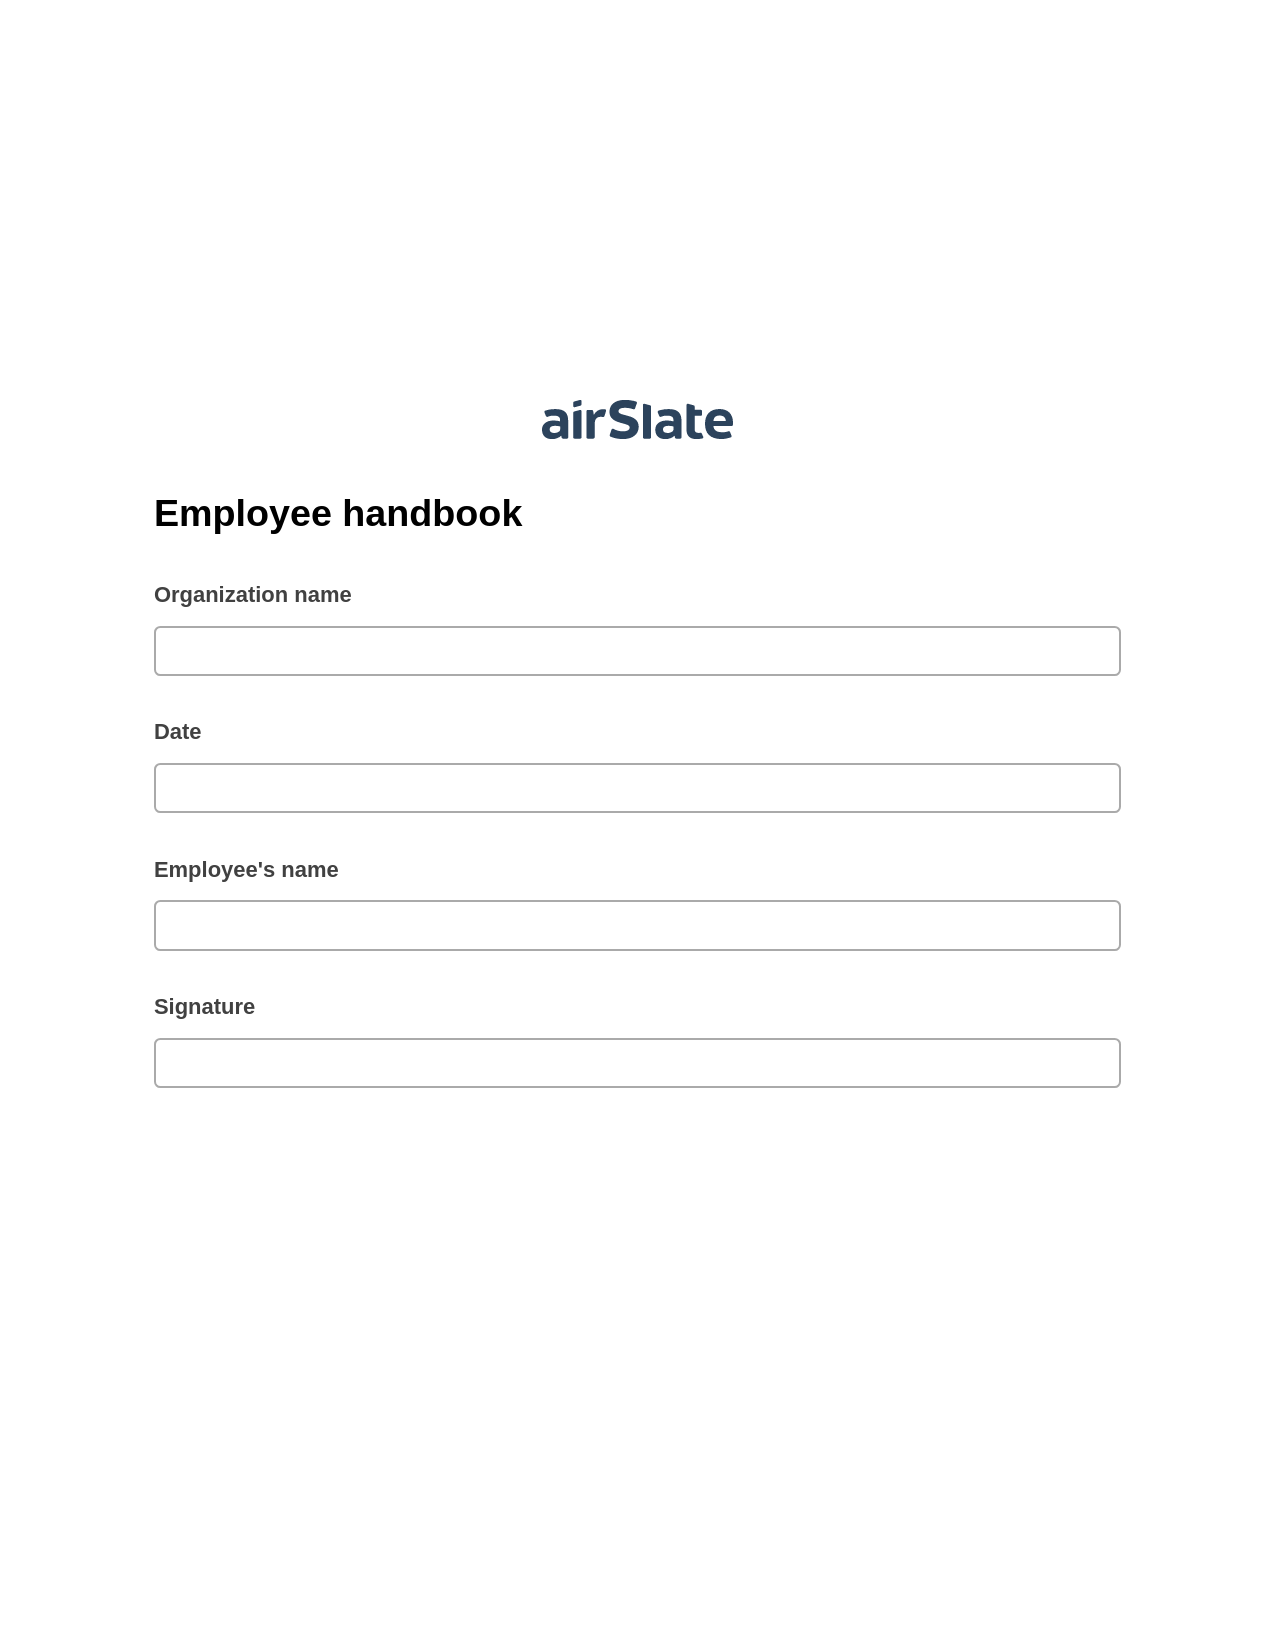 Employee handbook Pre-fill from another Slate Bot, Create Slate Reminder Bot, Slack Two-Way Binding Bot